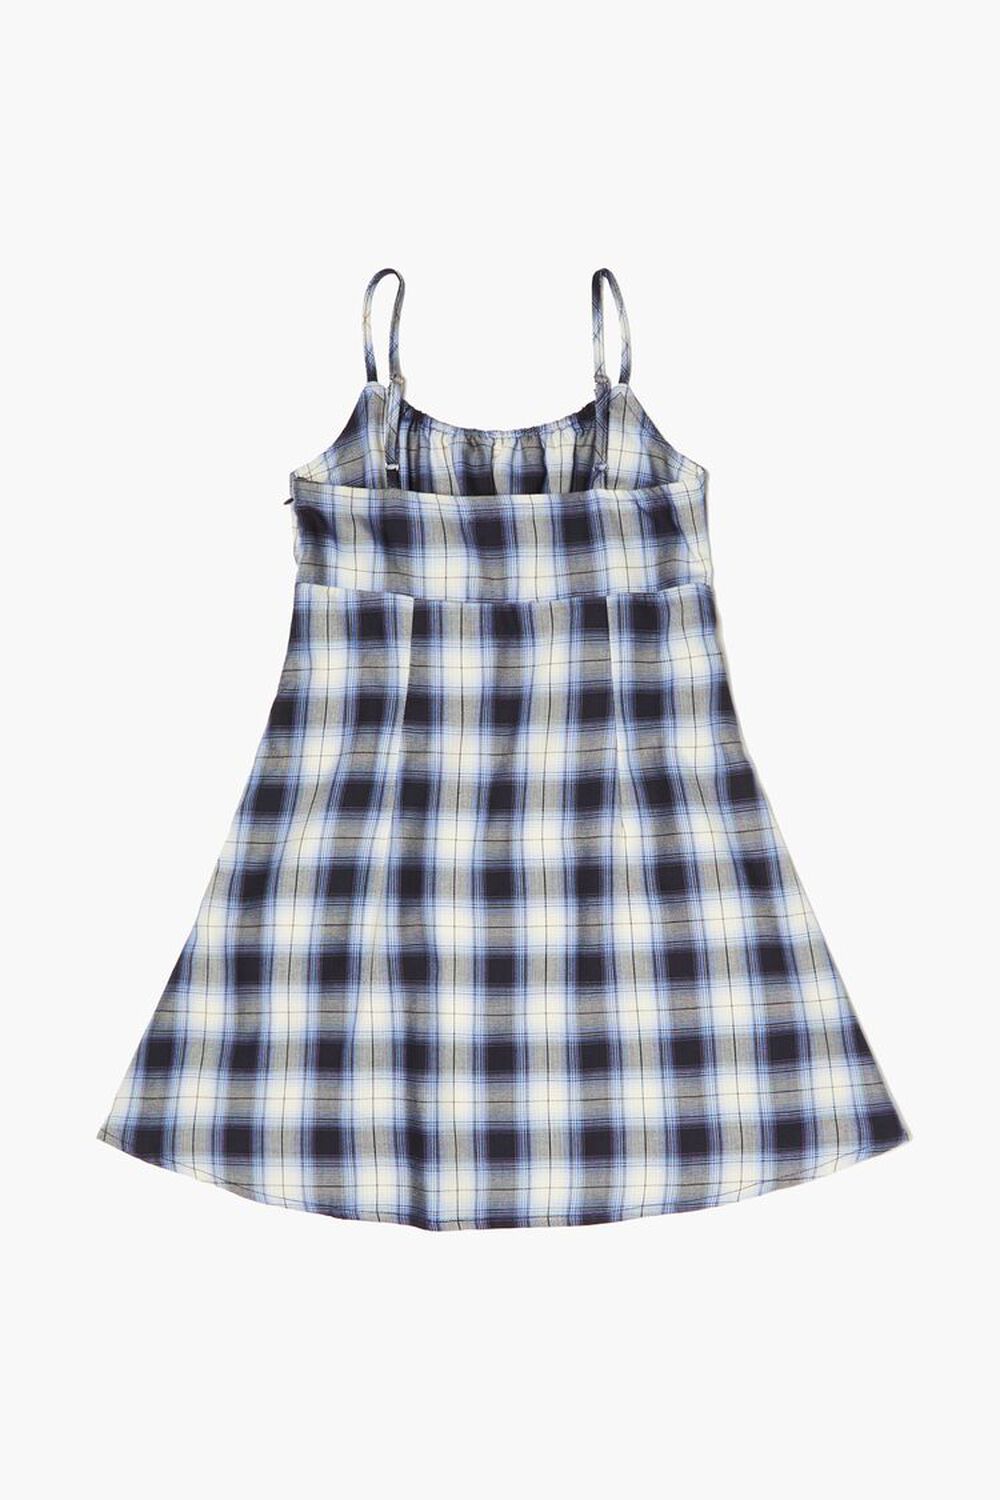 NAVY/MULTI Girls Plaid Cami Dress (Kids), image 2